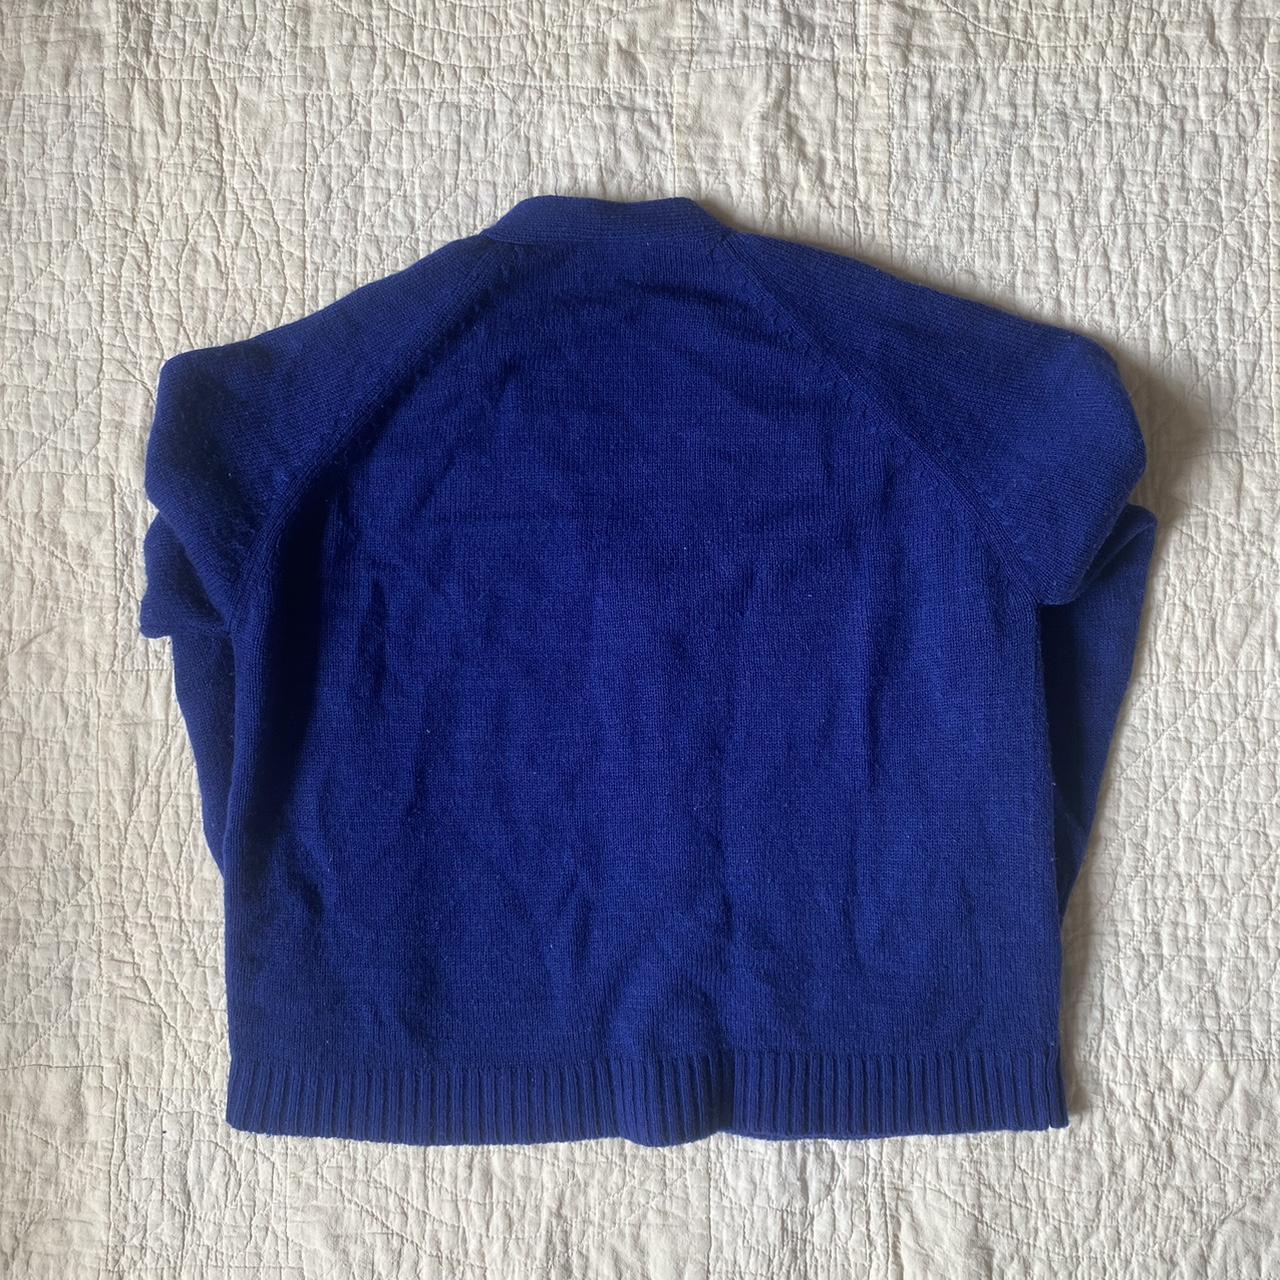 Vintage 60s/70s blue cable knit cardigan sweater... - Depop